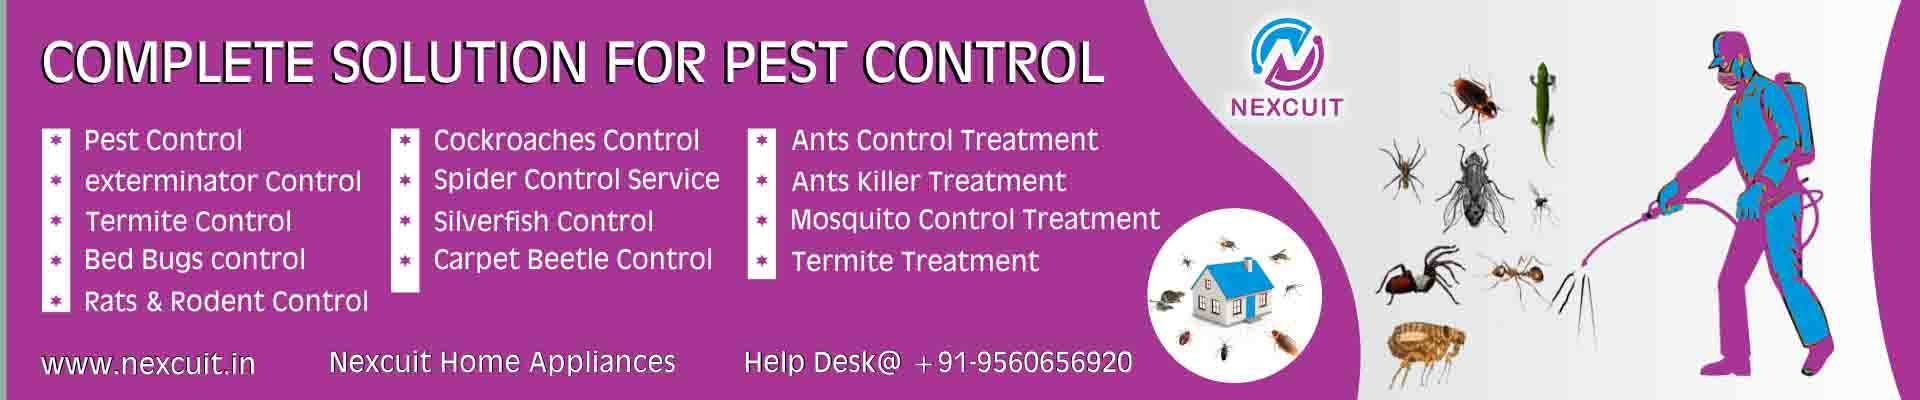 Best Pest Control Service in Delhi